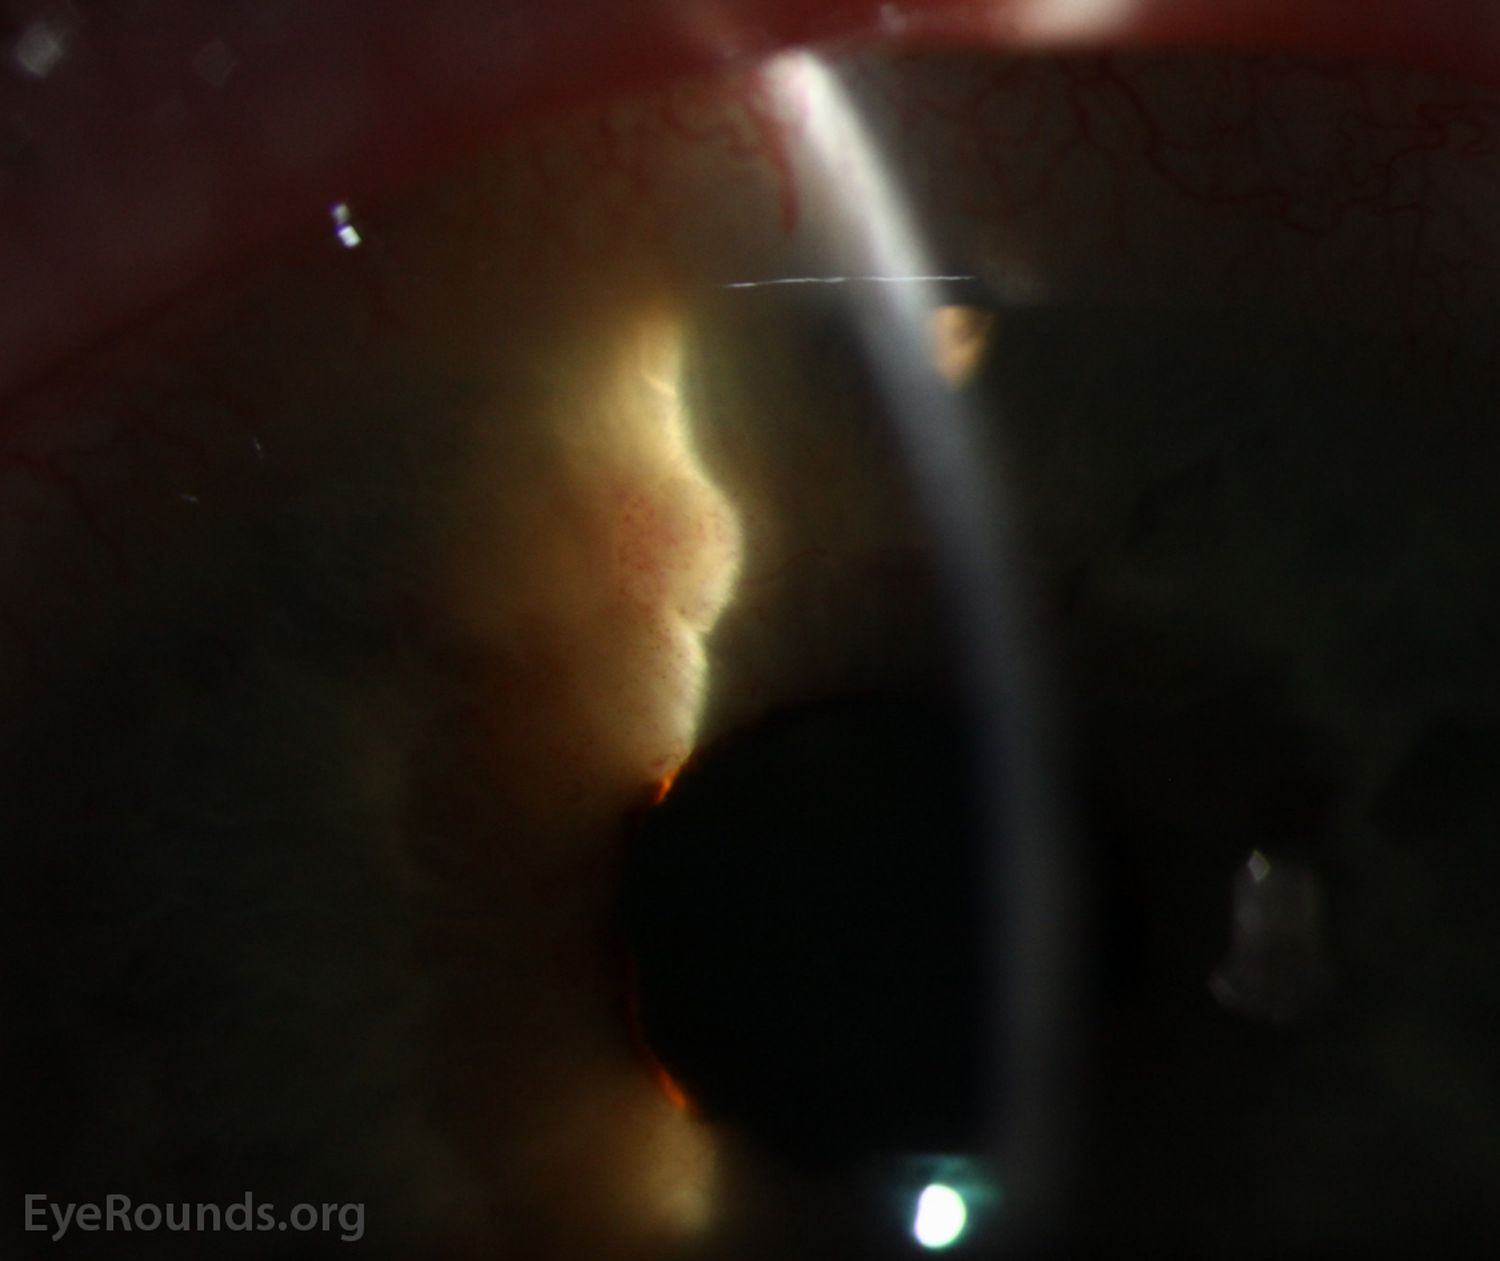  presence of gelatinous fibrovascular lesions along the pupillary margin and peripheral iris